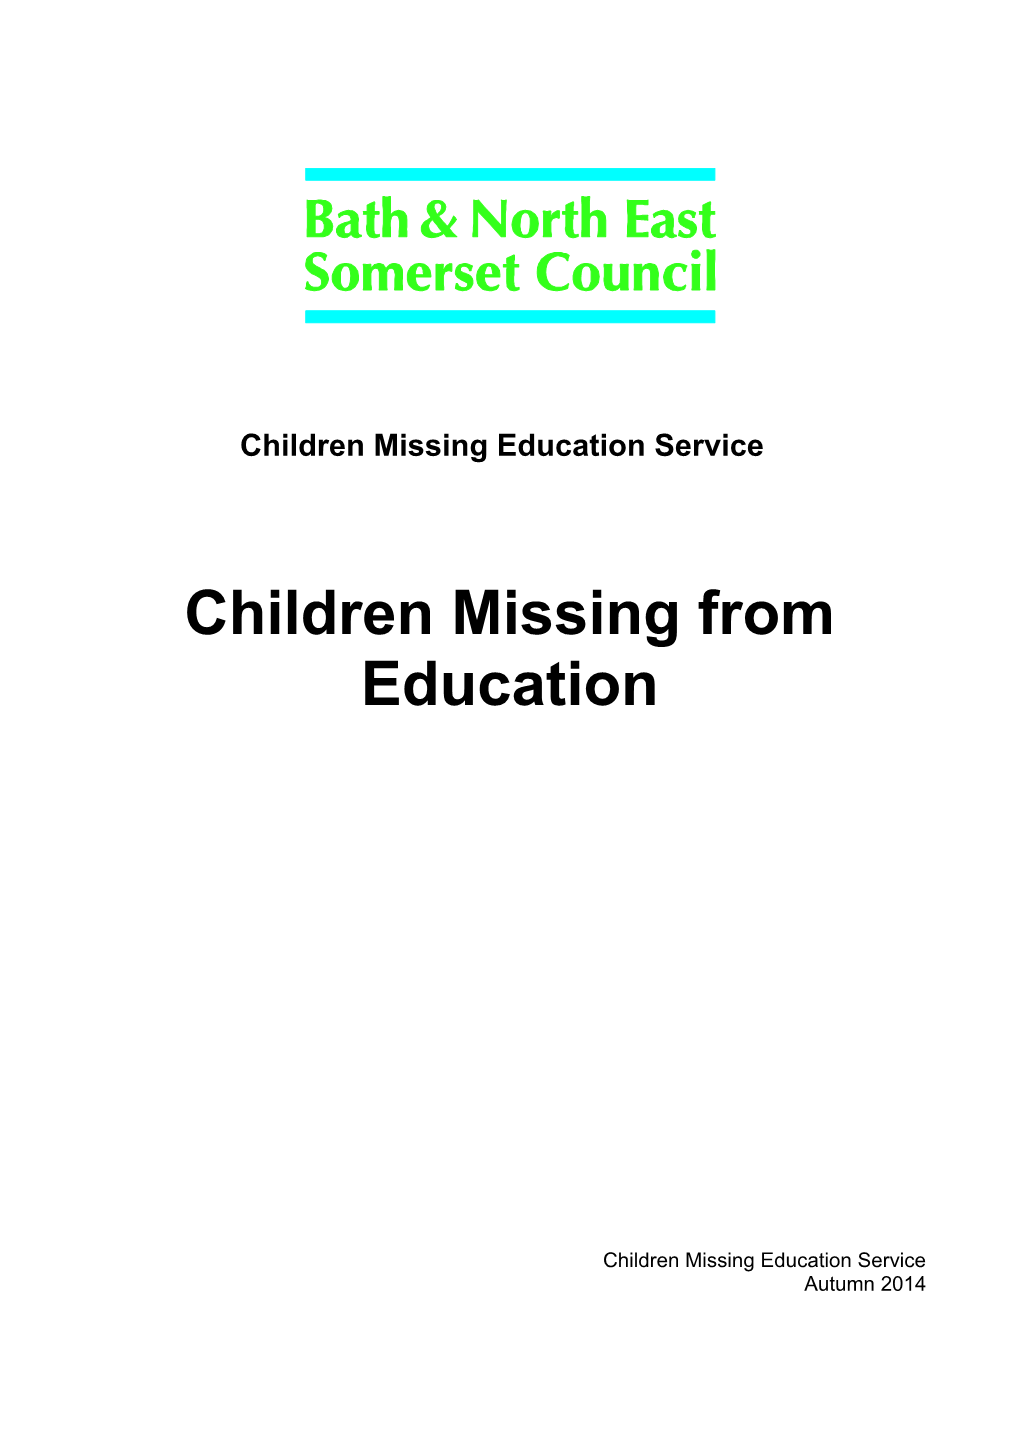 Children Missing from Education